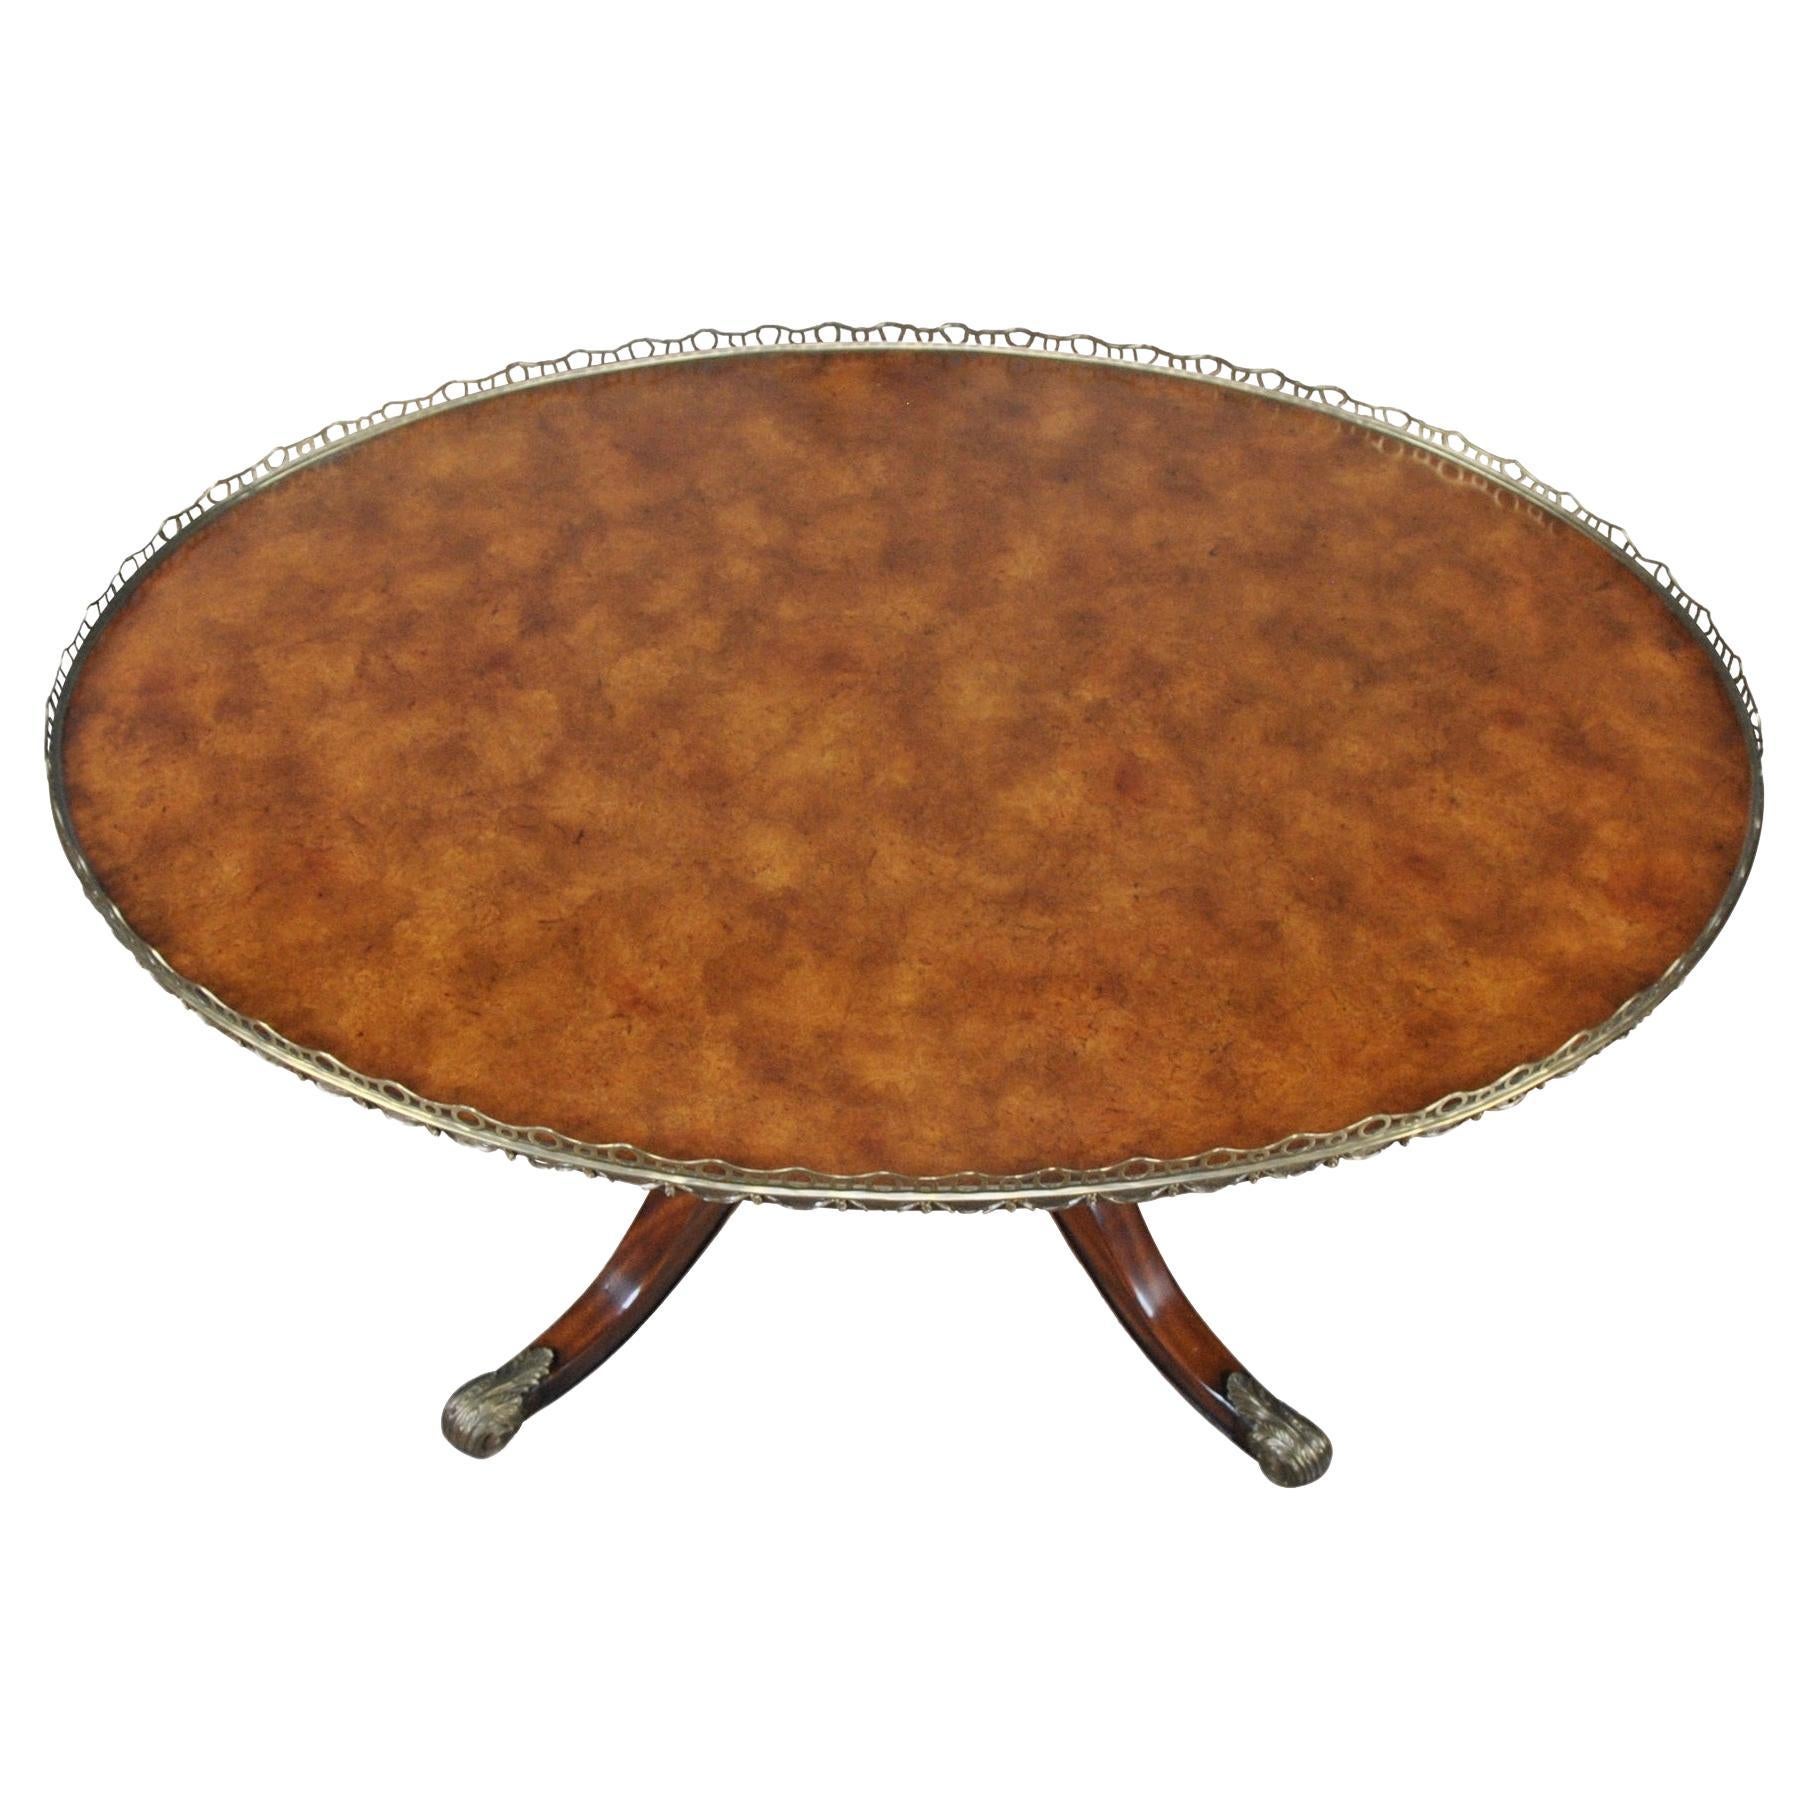 Vintage Theodore Alexander Oval Coffee Table